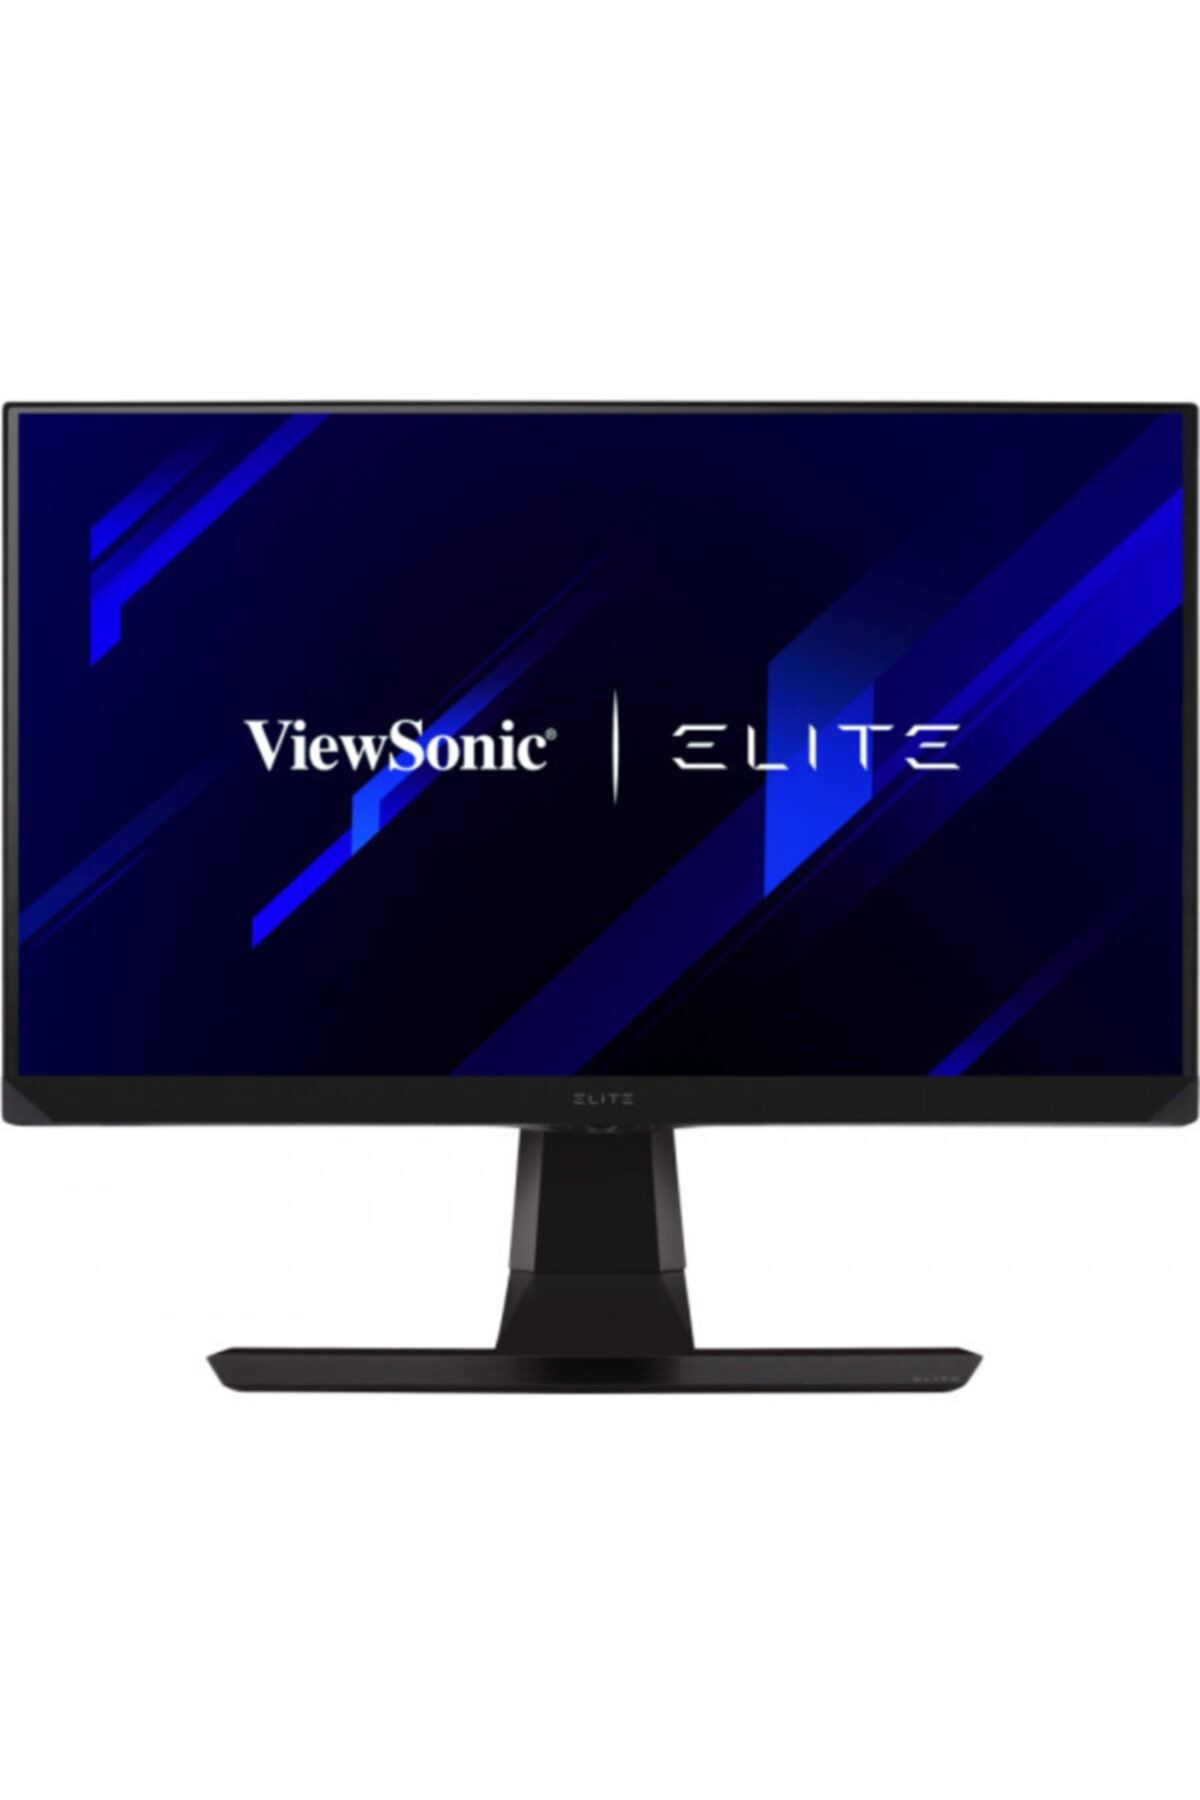 ViewSonic Elite XG270 27" 1ms Full HD G-Sync IPS Siyah Oyuncu Monitörü (ViewSonic Türkiye Garantildir)